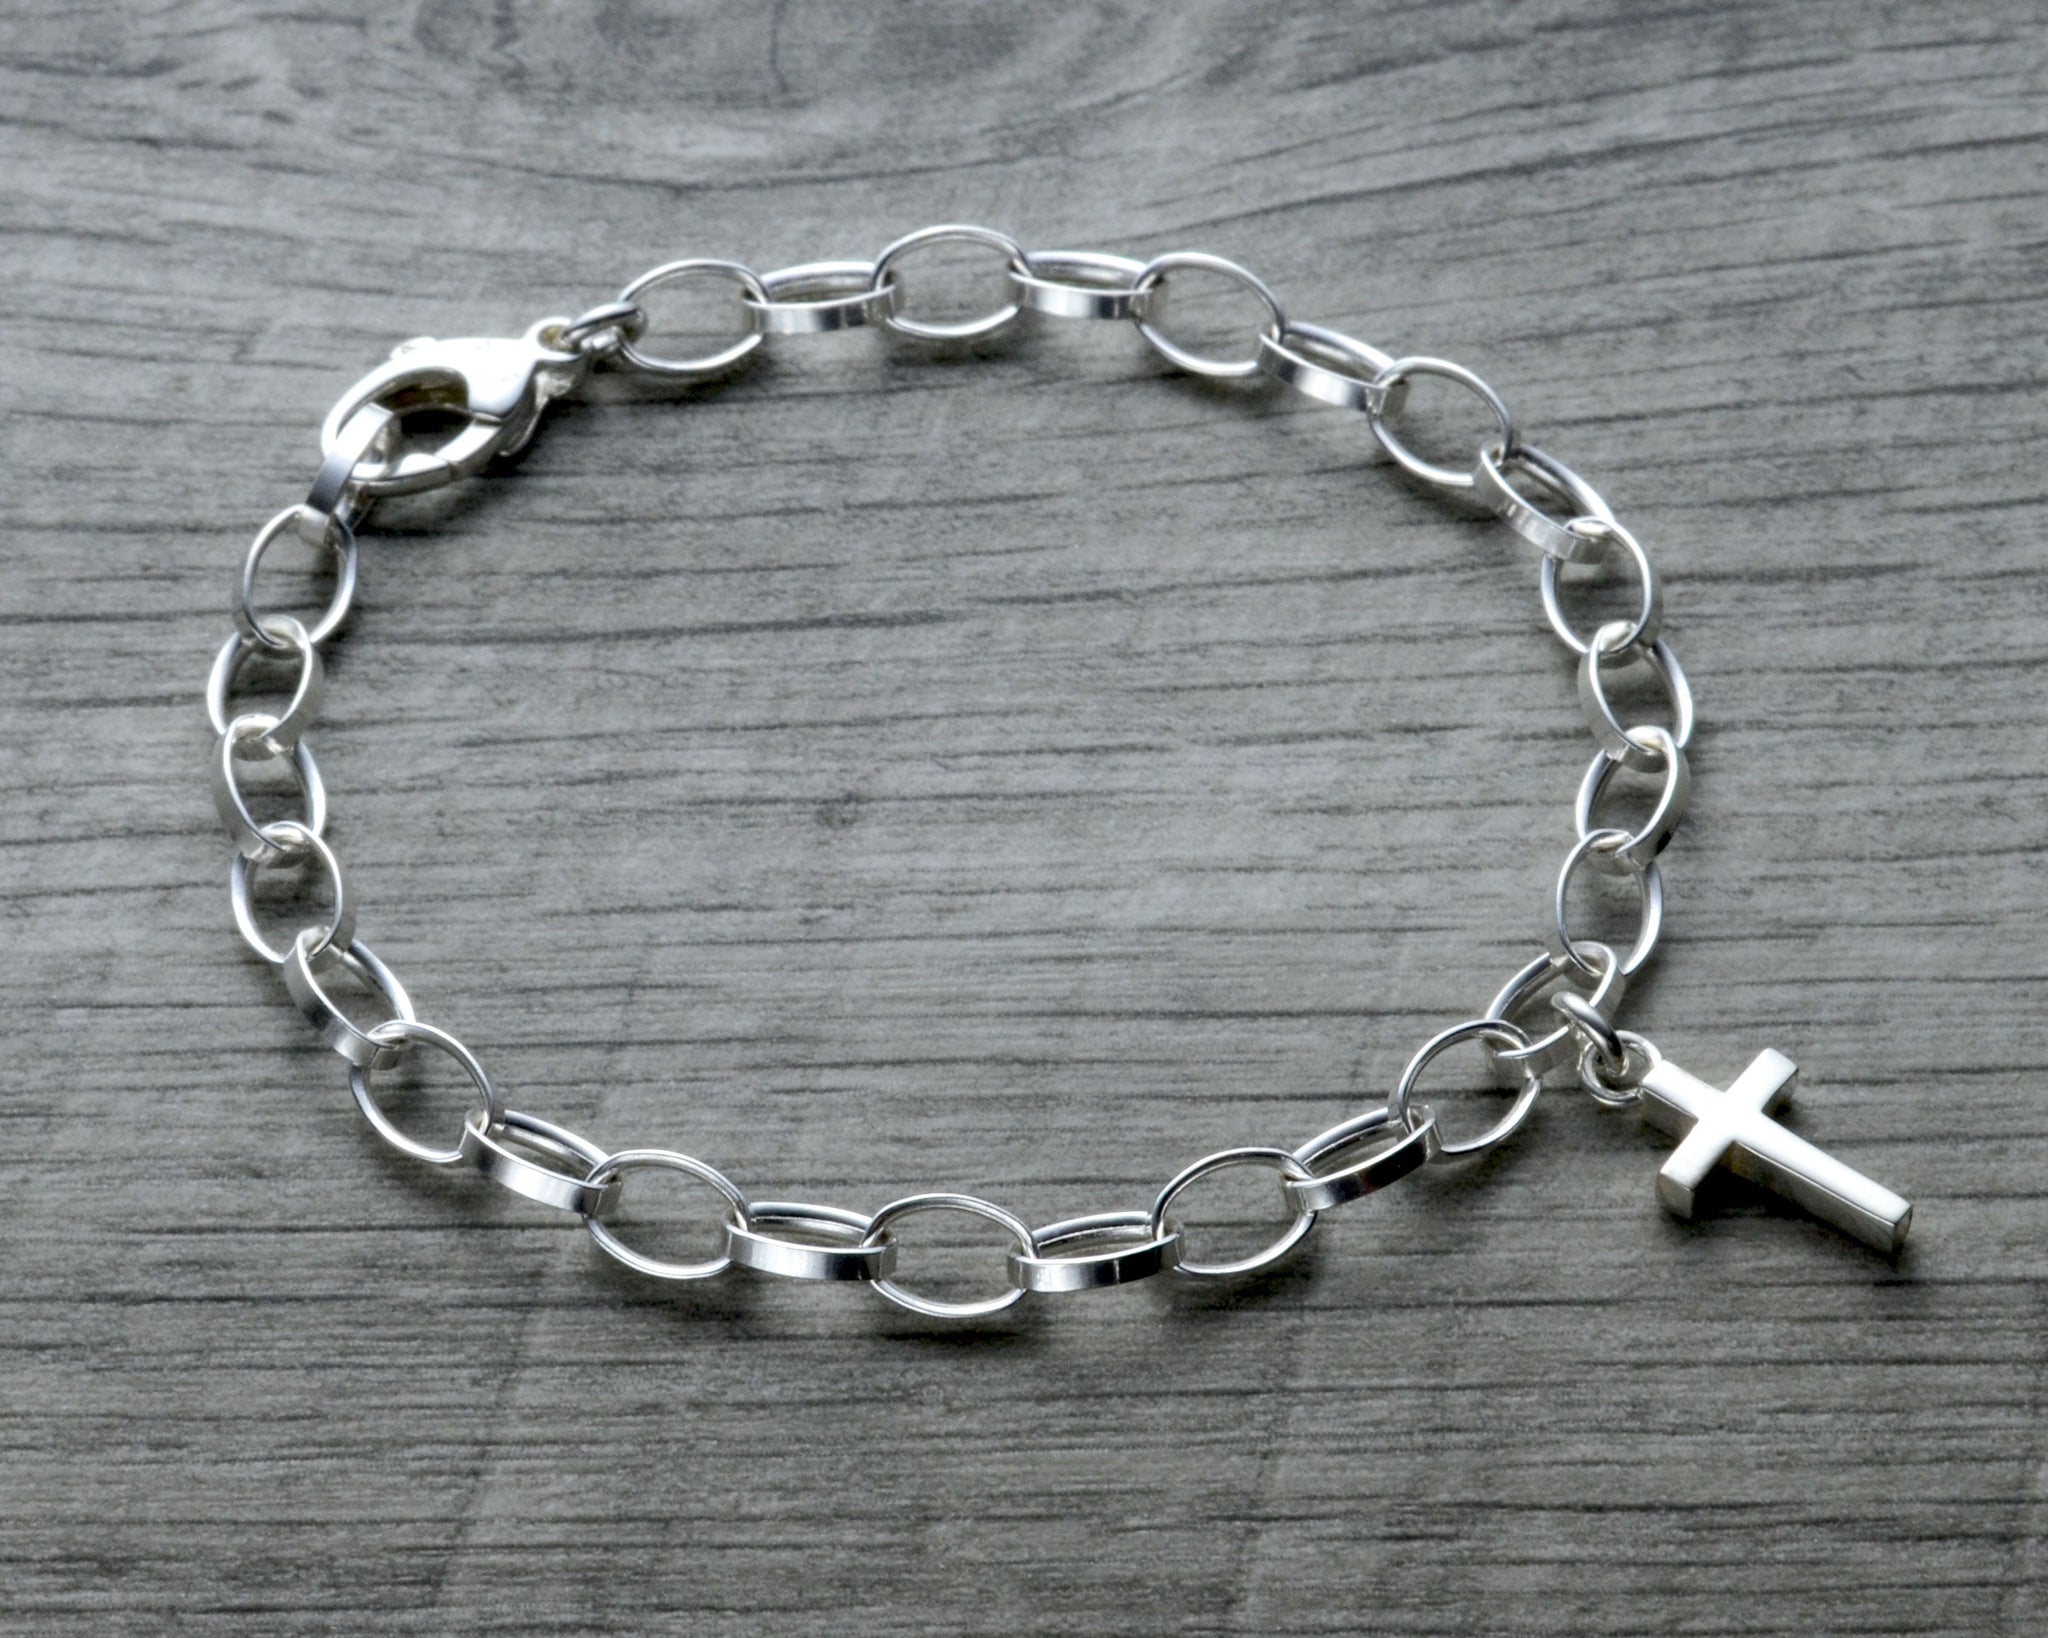 Amazon.com: Cross bracelet for men, groomsmen gift, men's bracelet with a silver  cross pendant, black cord, gift for him, christian catholic jewelry :  Handmade Products